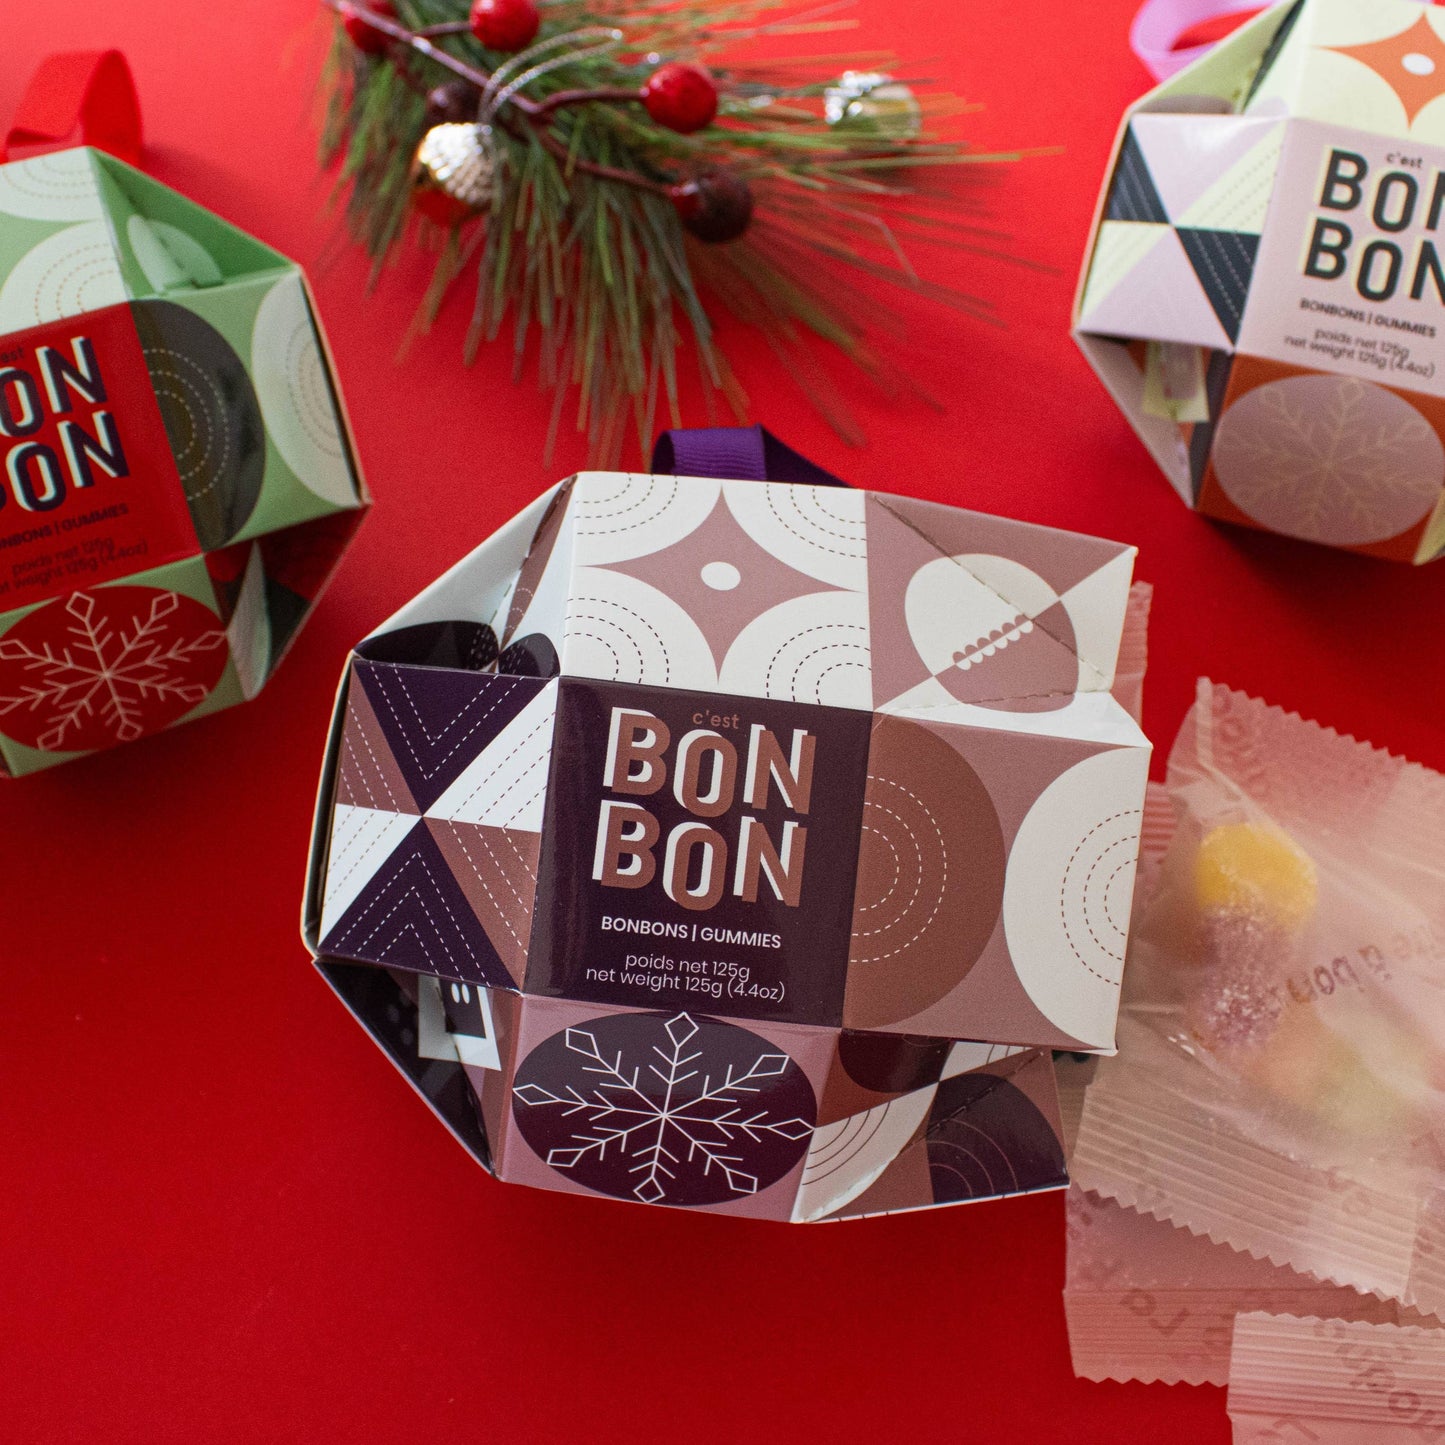 Bon Bon Christmas Ornaments - 5 bags of Gummy Candy inside!